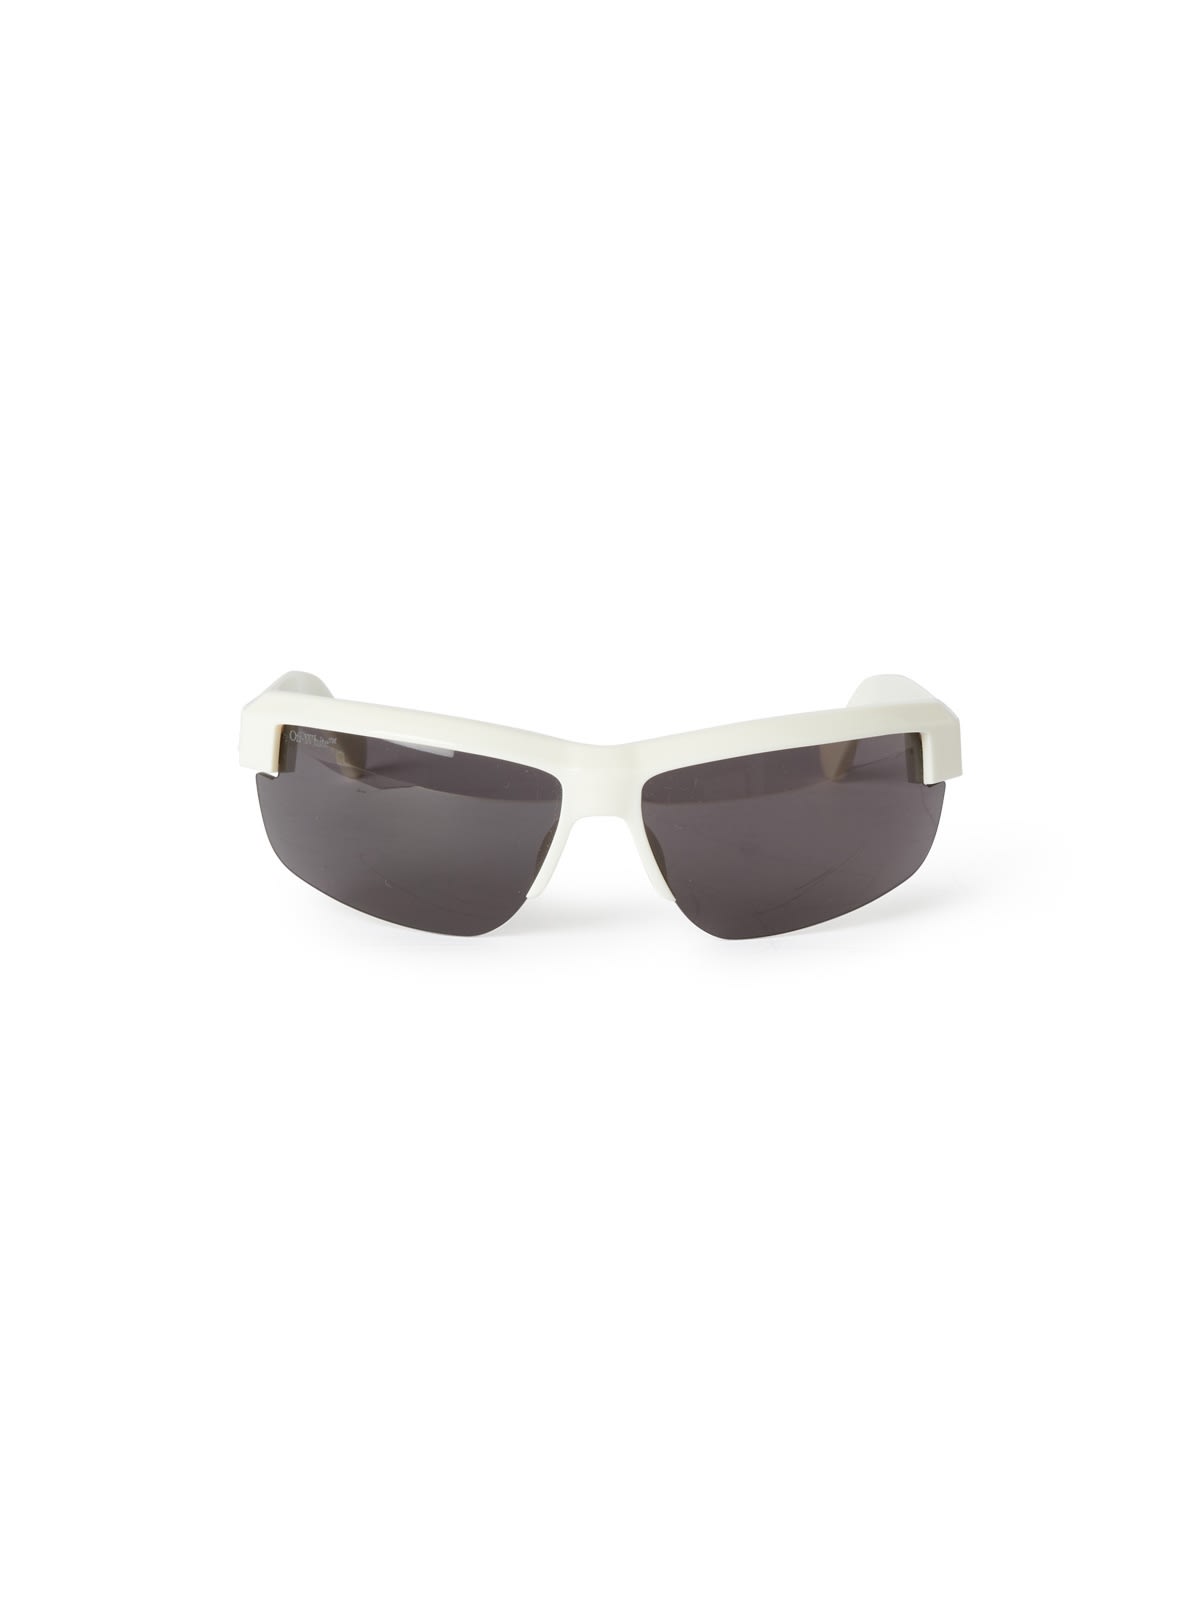 Off-White TOLEDO SUNGLASSES Sunglasses